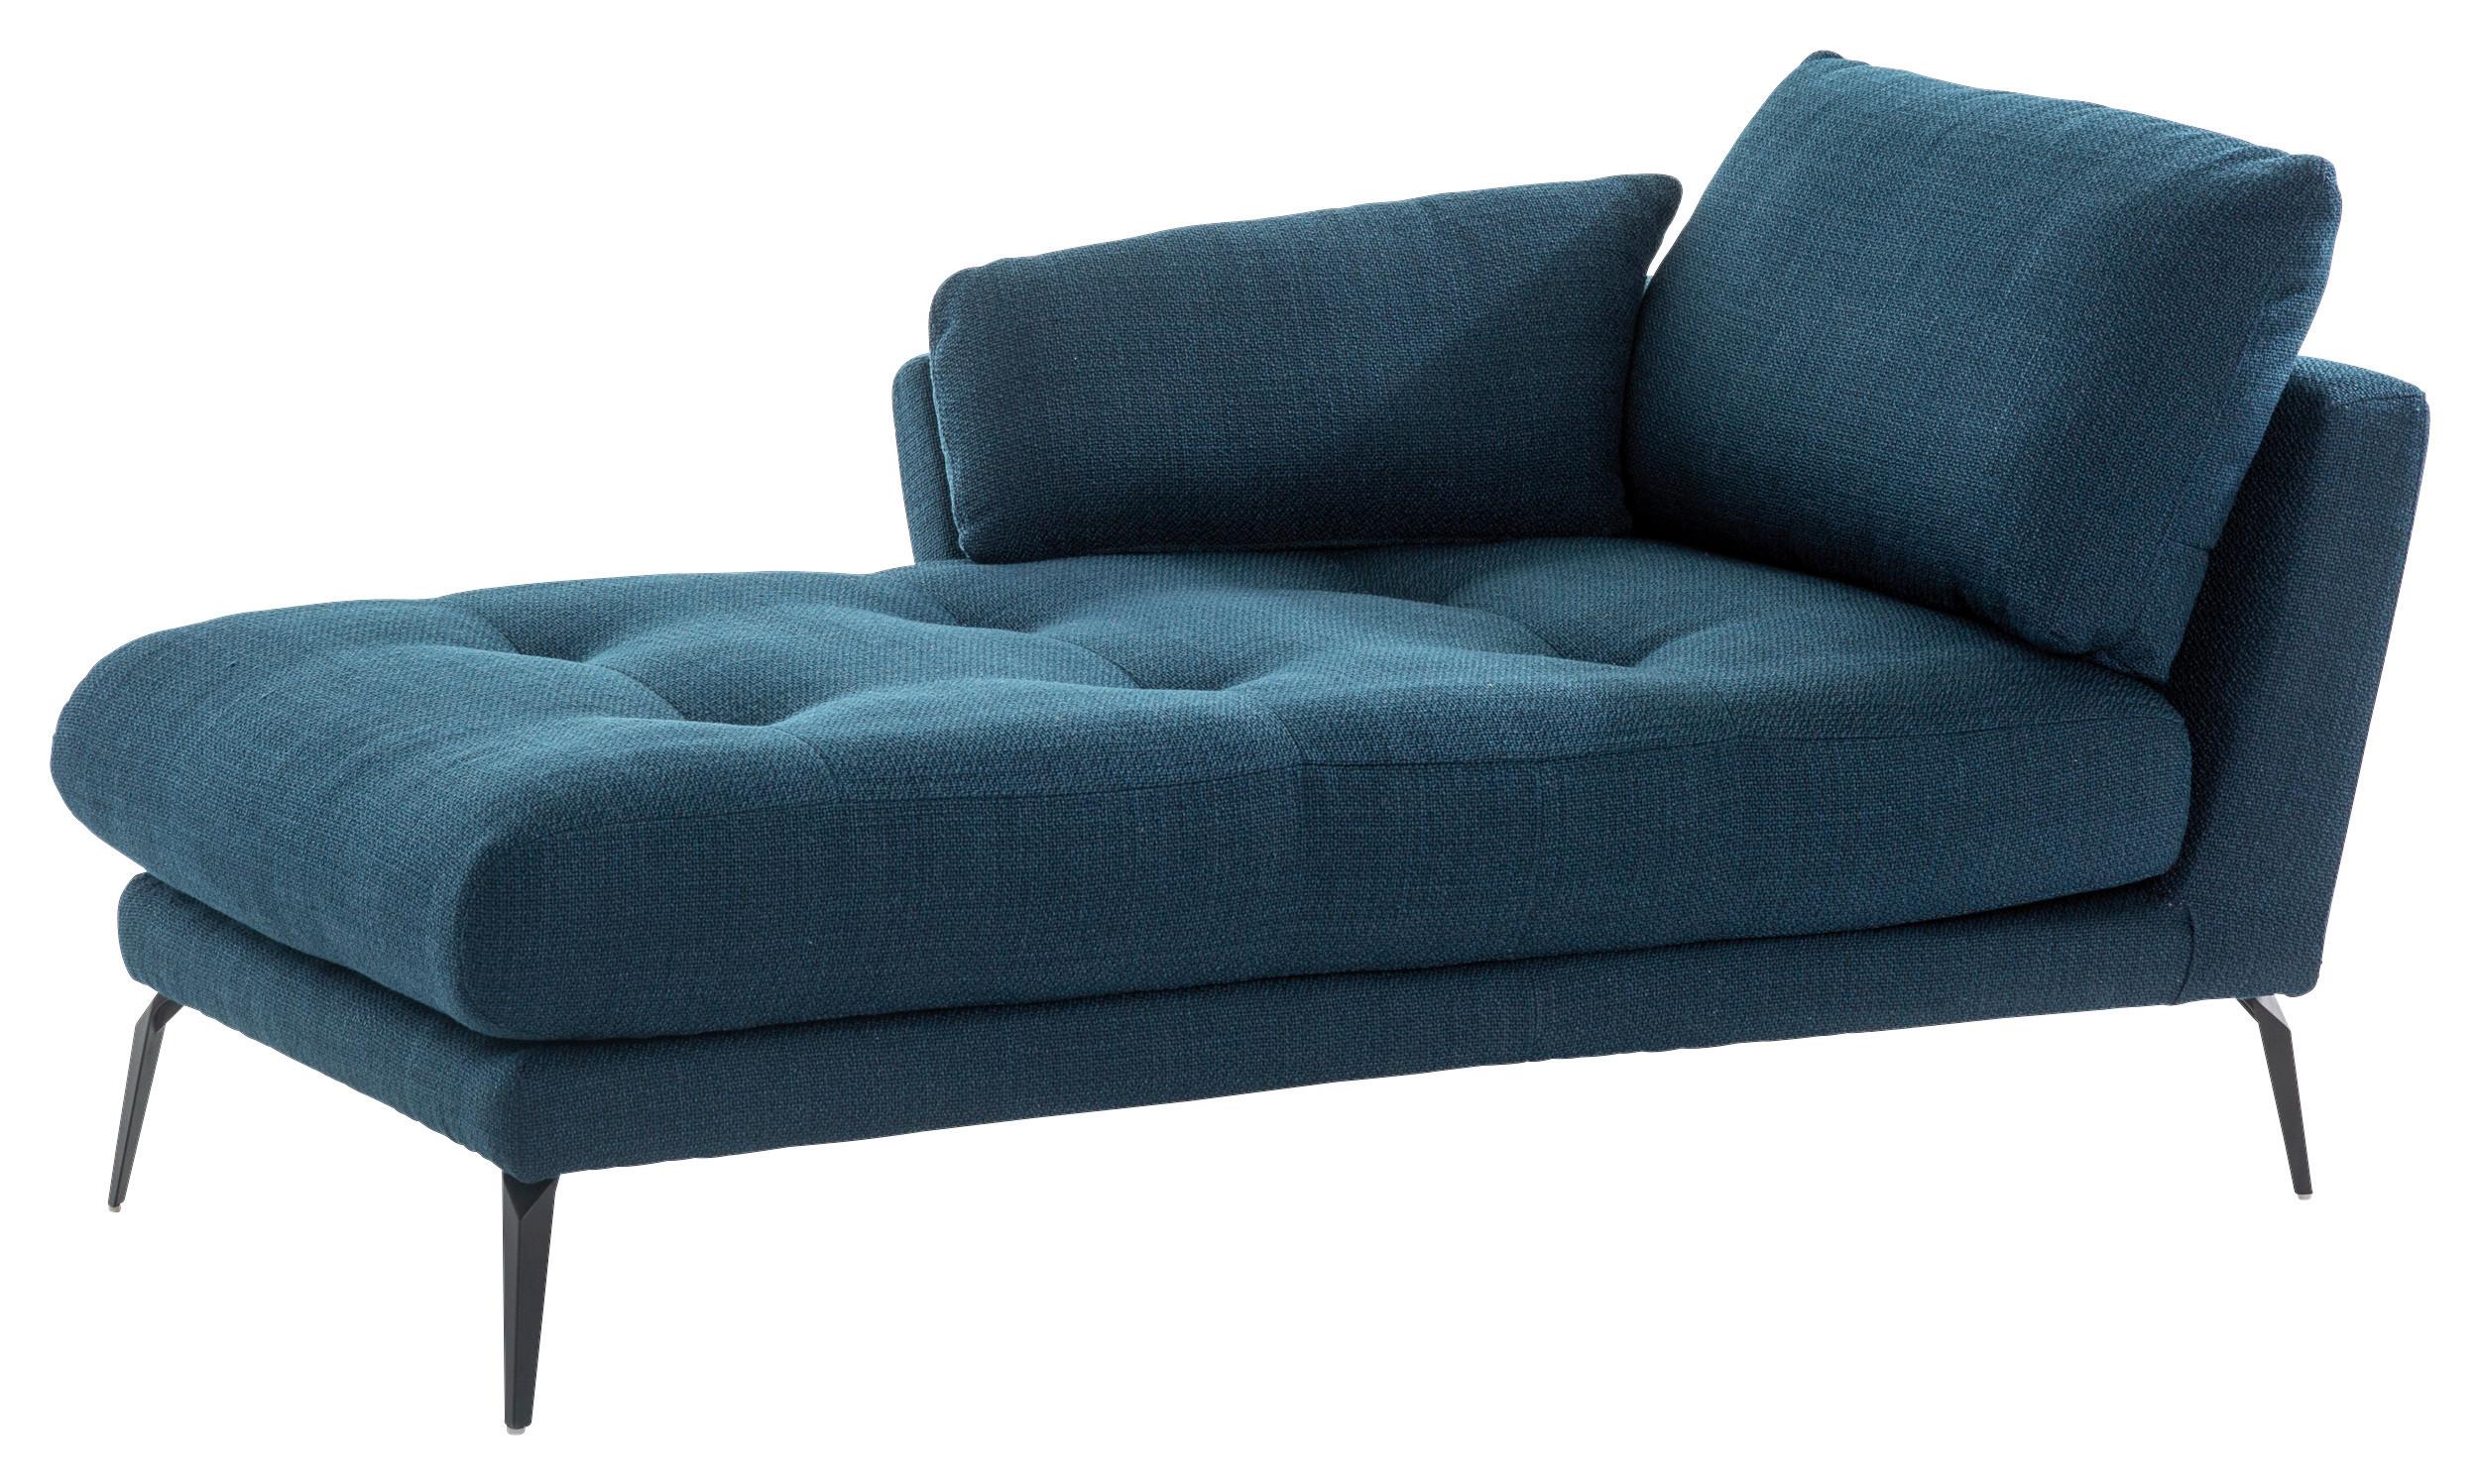 Recamiere Softy L: 168 cm Textil Blau, Ausführung Links - Blau/Schwarz, MODERN, Textil (106/81/168cm) - W.Schillig